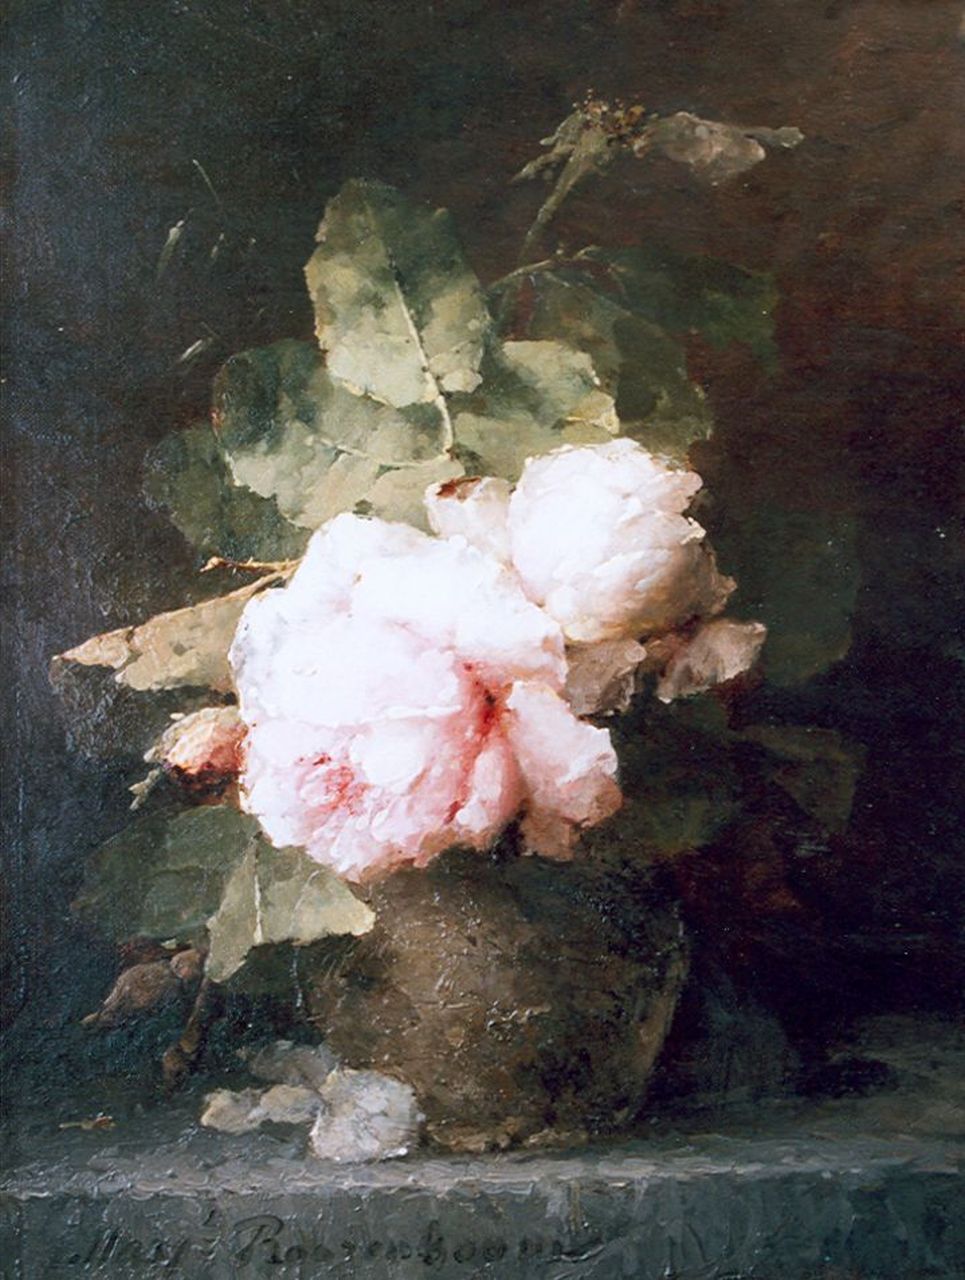 Roosenboom M.C.J.W.H.  | 'Margaretha' Cornelia Johanna Wilhelmina Henriëtta Roosenboom, Roze rozen, olieverf op doek 39,7 x 30,0 cm, gesigneerd linksonder